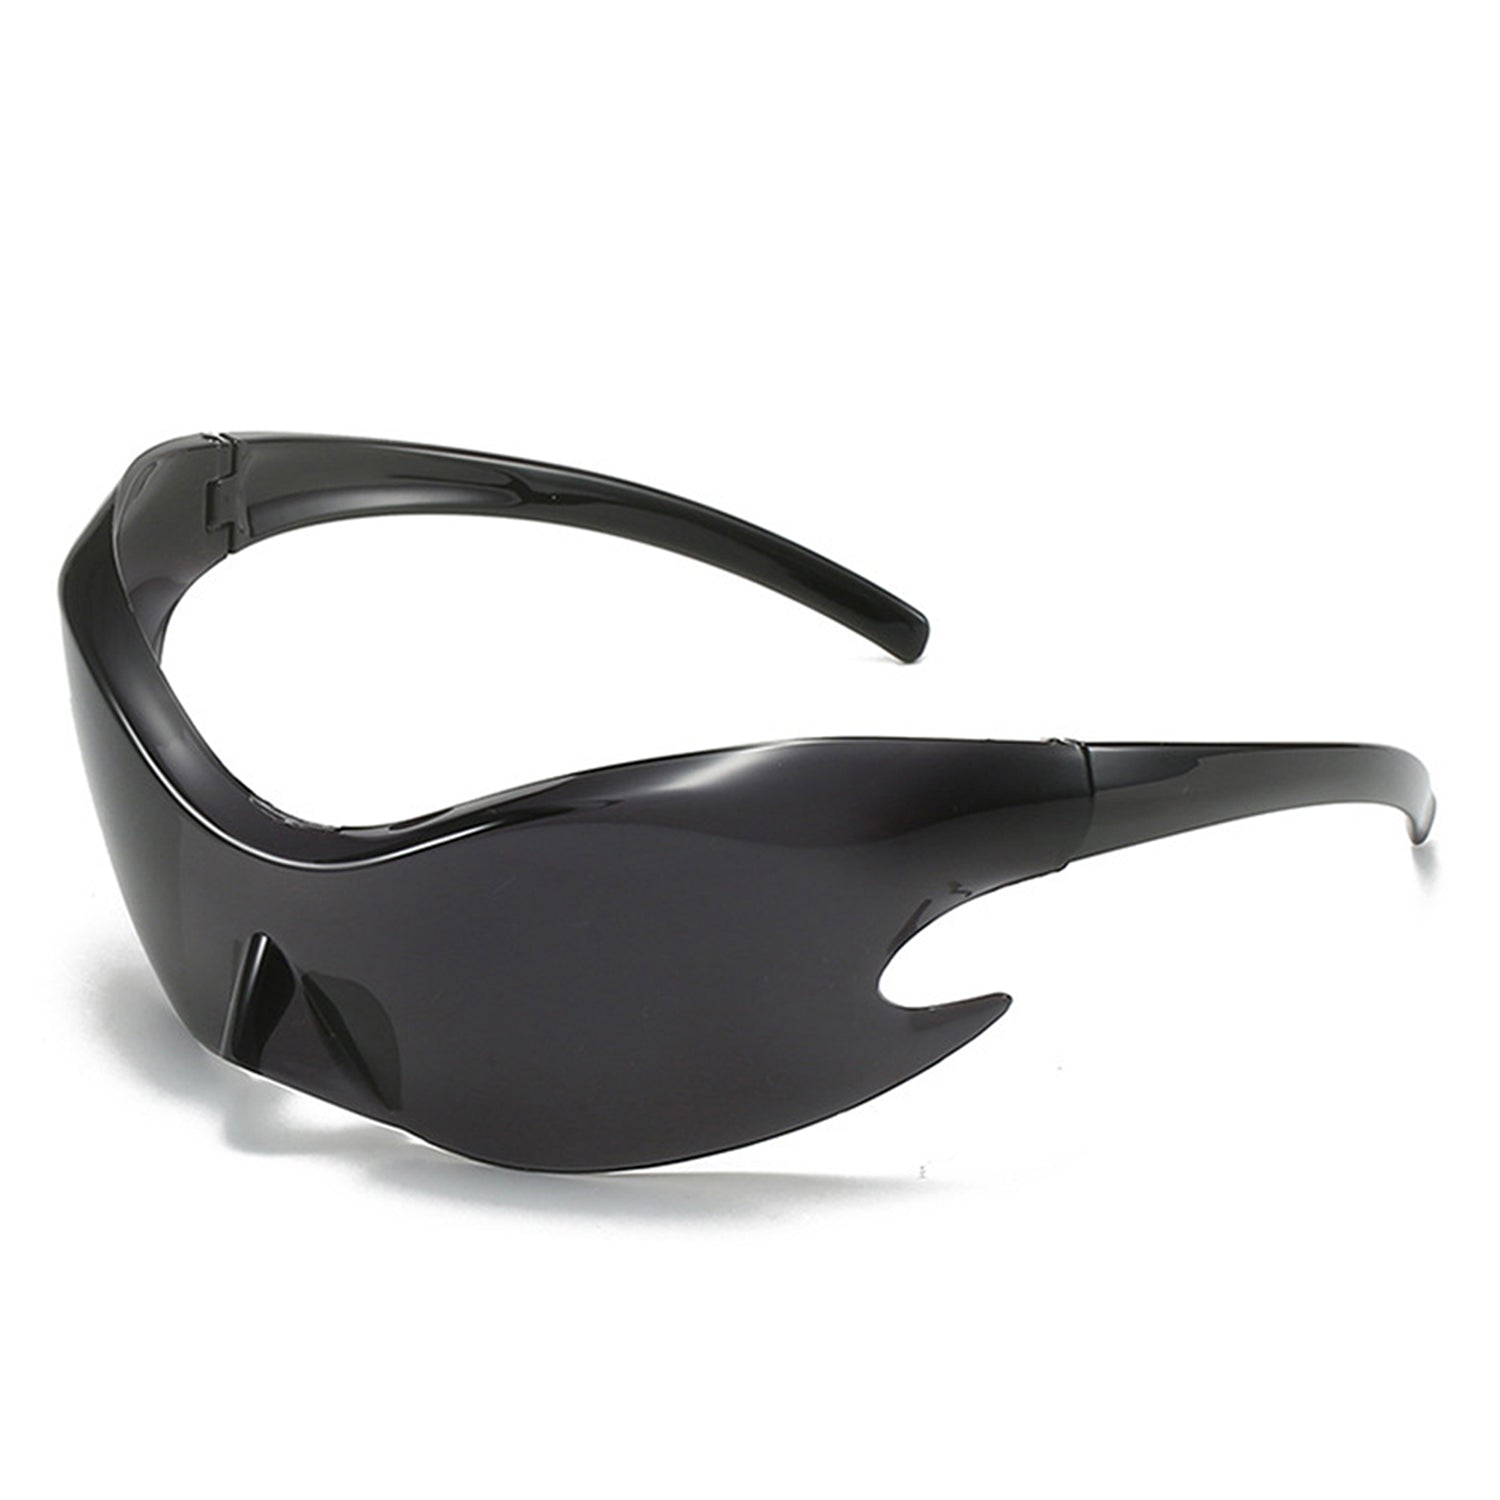 Whiestan - Futuristic Mirrored Sleek Wrap Around Sports Sunglasses Black